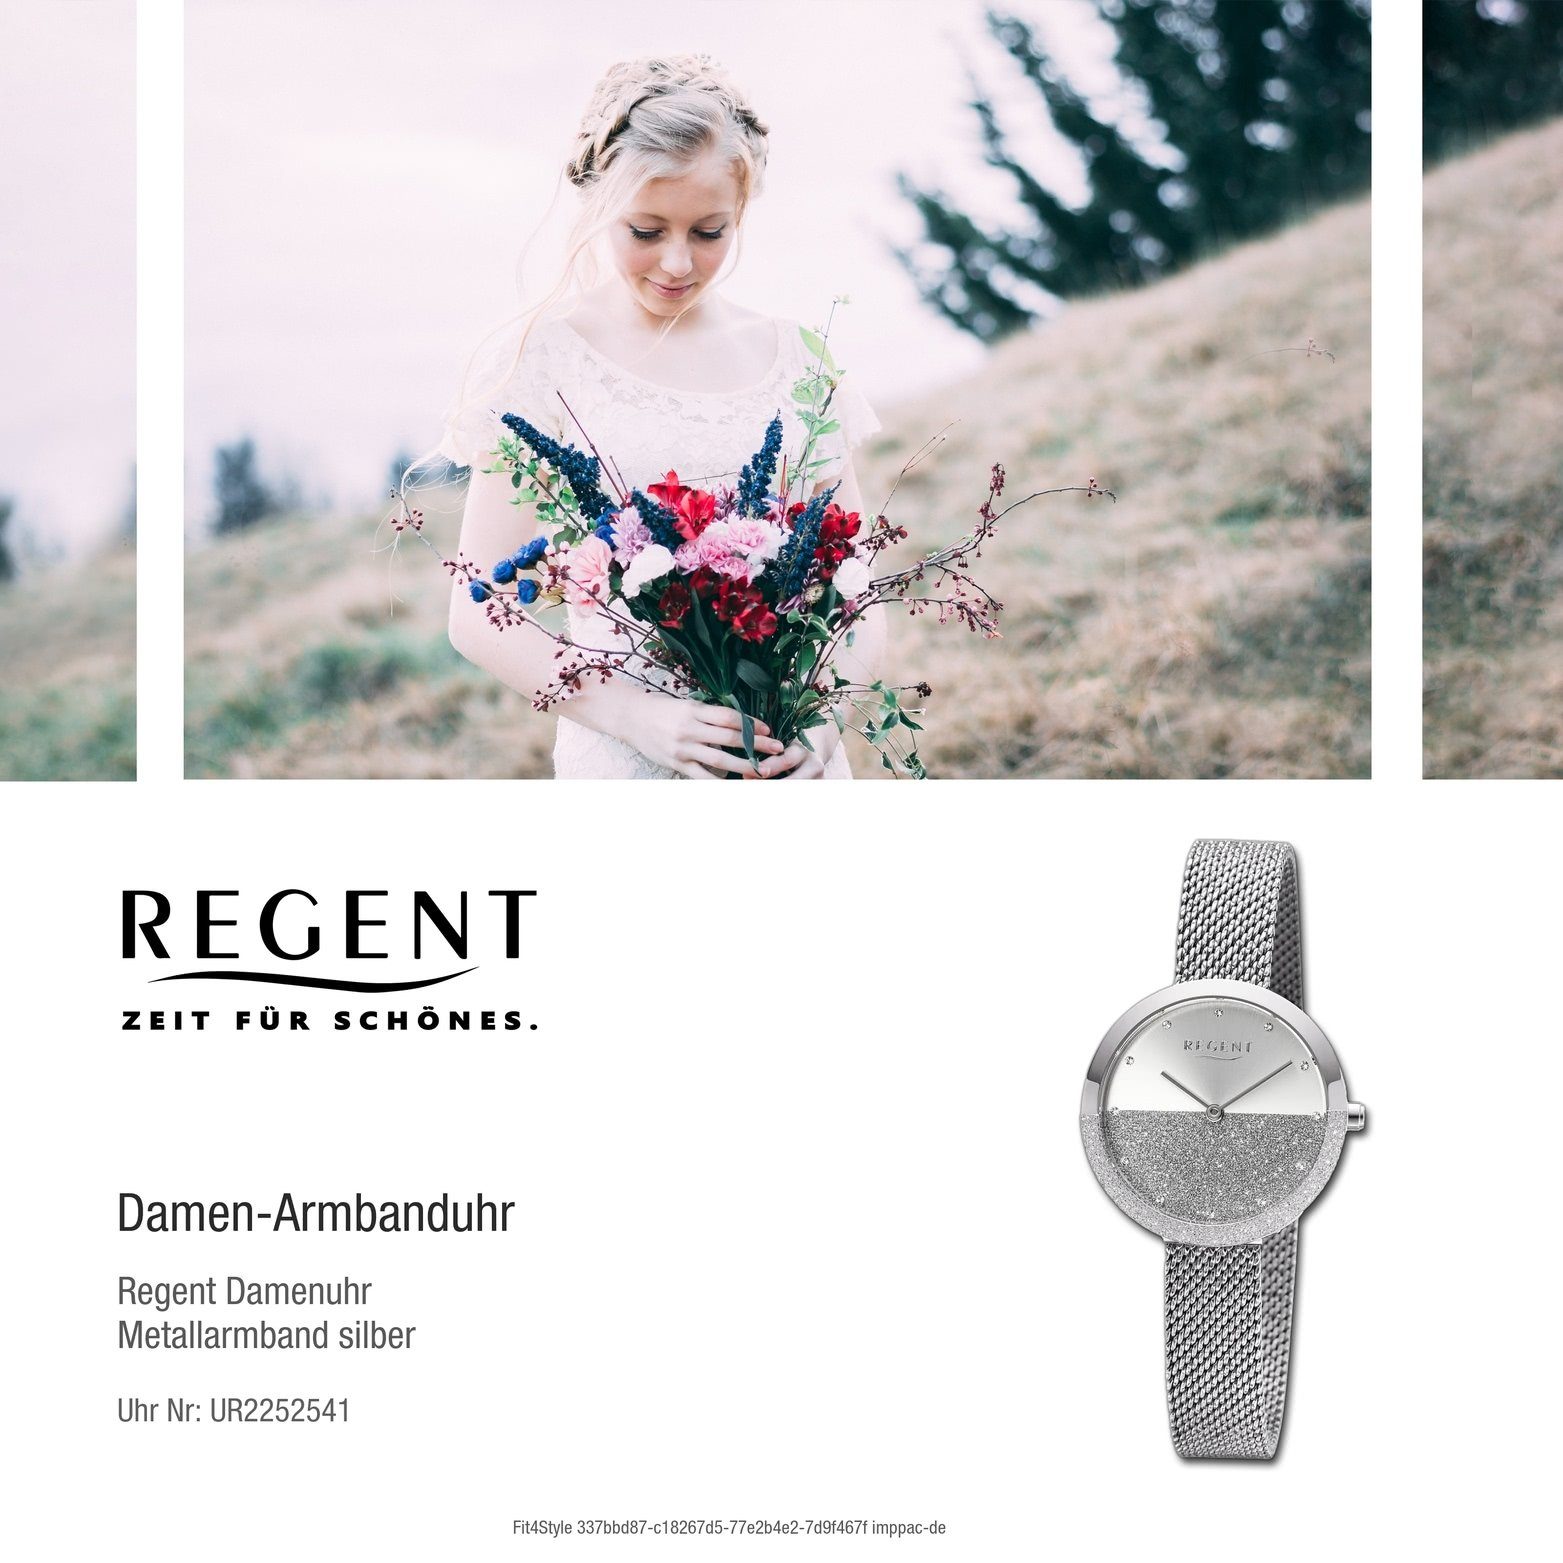 Armbanduhr Quarzuhr Analog, Regent extra (ca. groß rundes Metallarmband Gehäuse, 32mm) Regent Damen Damenuhr silber,